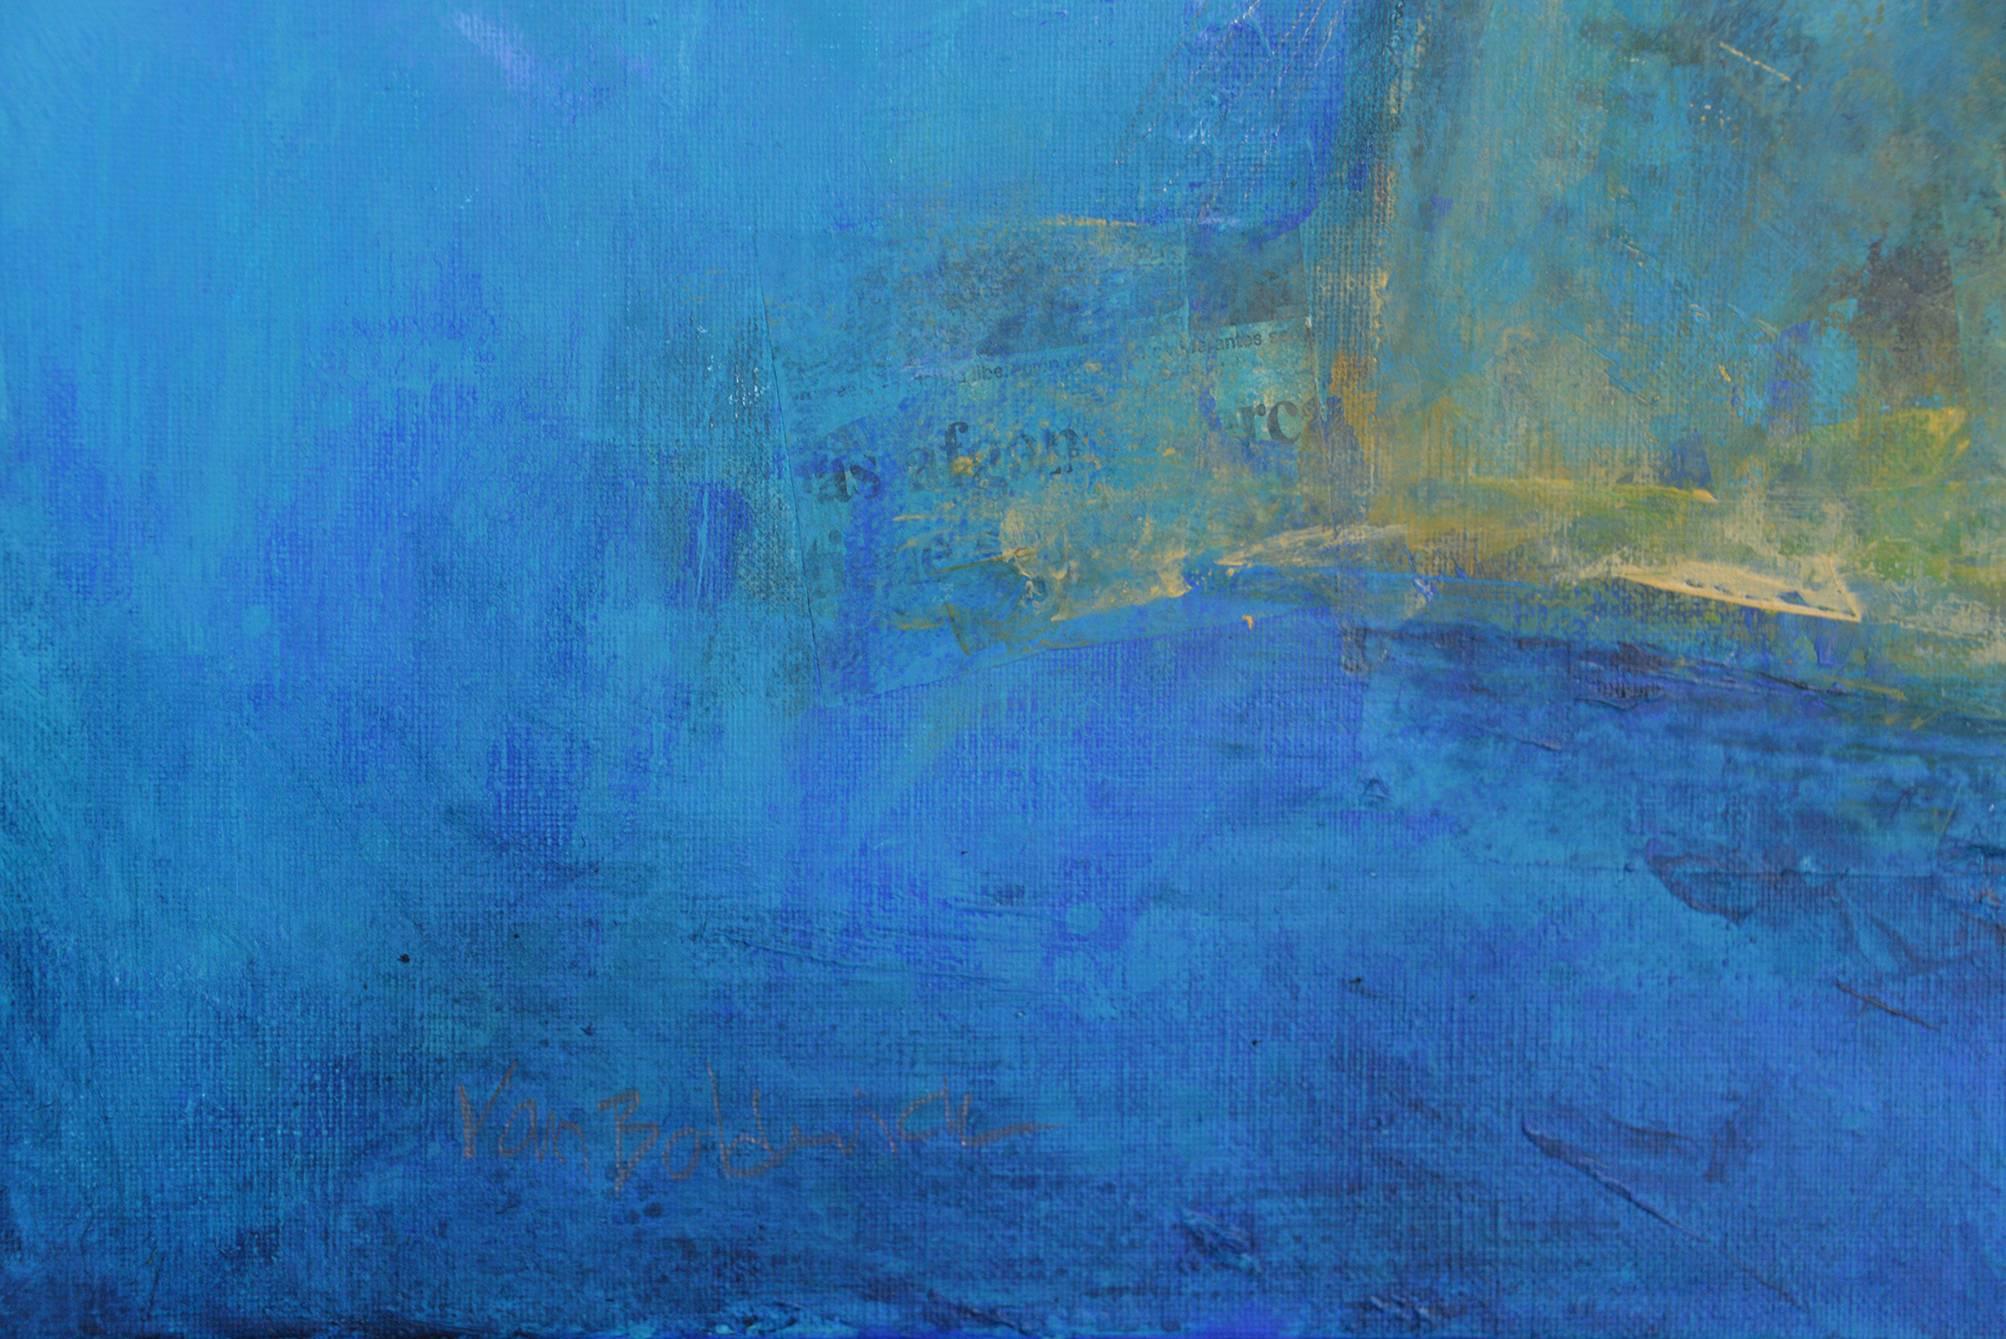 Le sacre du printemps, abstract coastline, light blue - Abstract Mixed Media Art by Robert van Bolderick